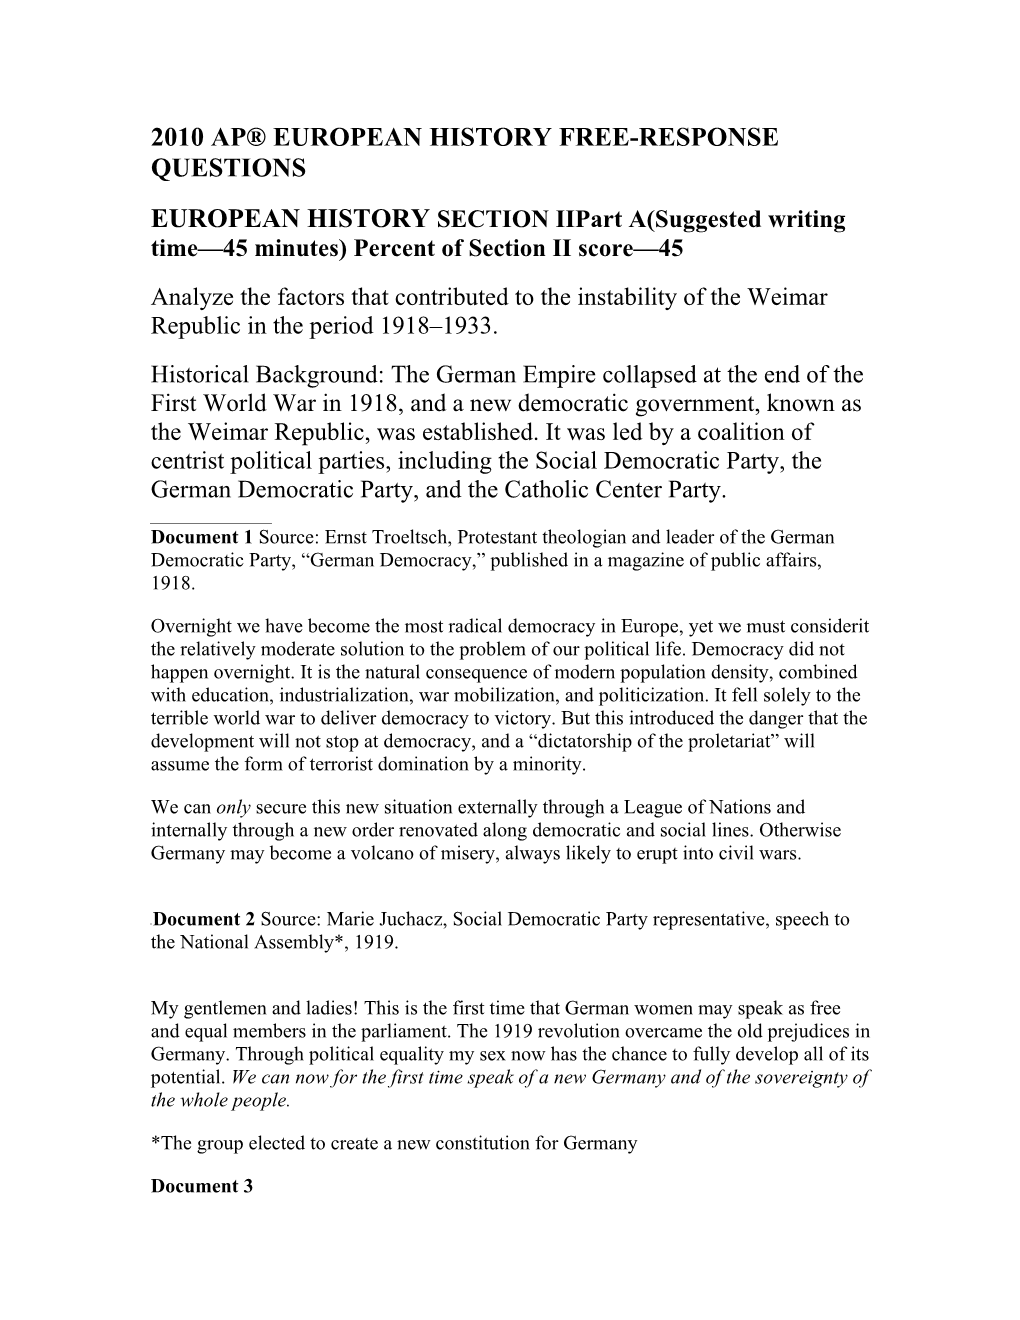 2010 Ap European History Free-Response Questions